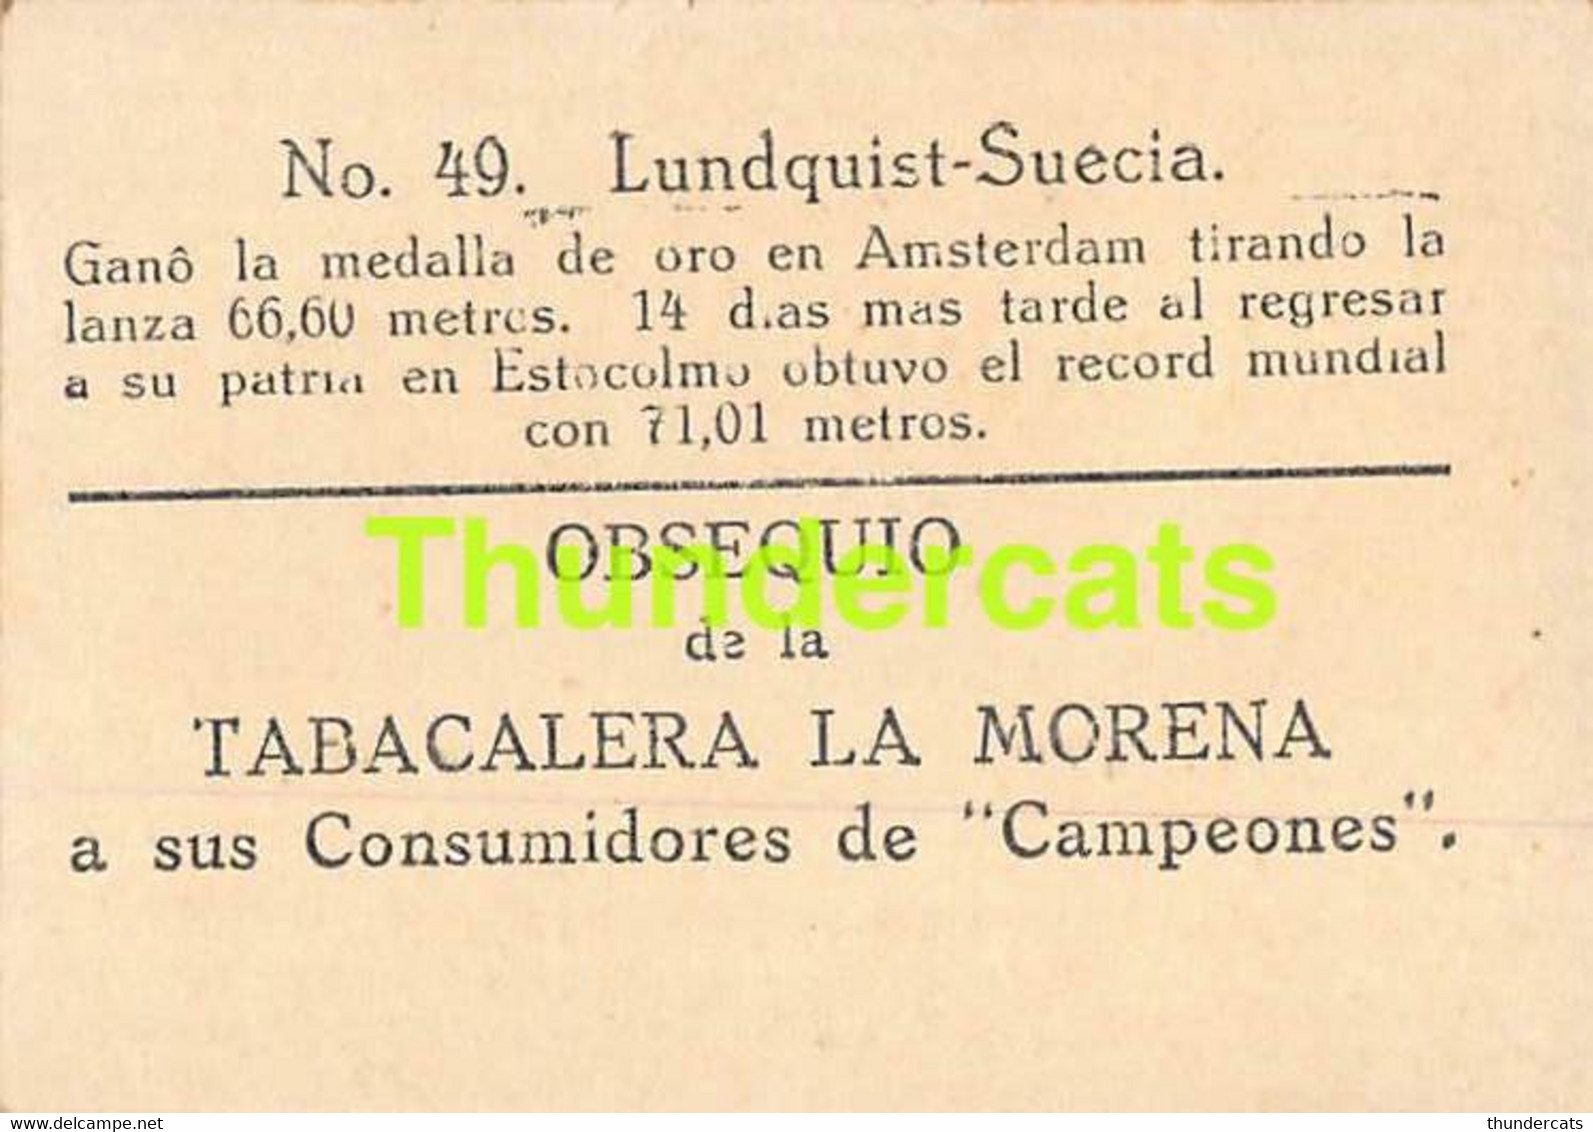 VINTAGE TRADING TOBACCO CARD CHROMO ATHLETICS 1928 TABACALERA LA MORENA No 49 LUNDQUIST SWEDEN - Athlétisme